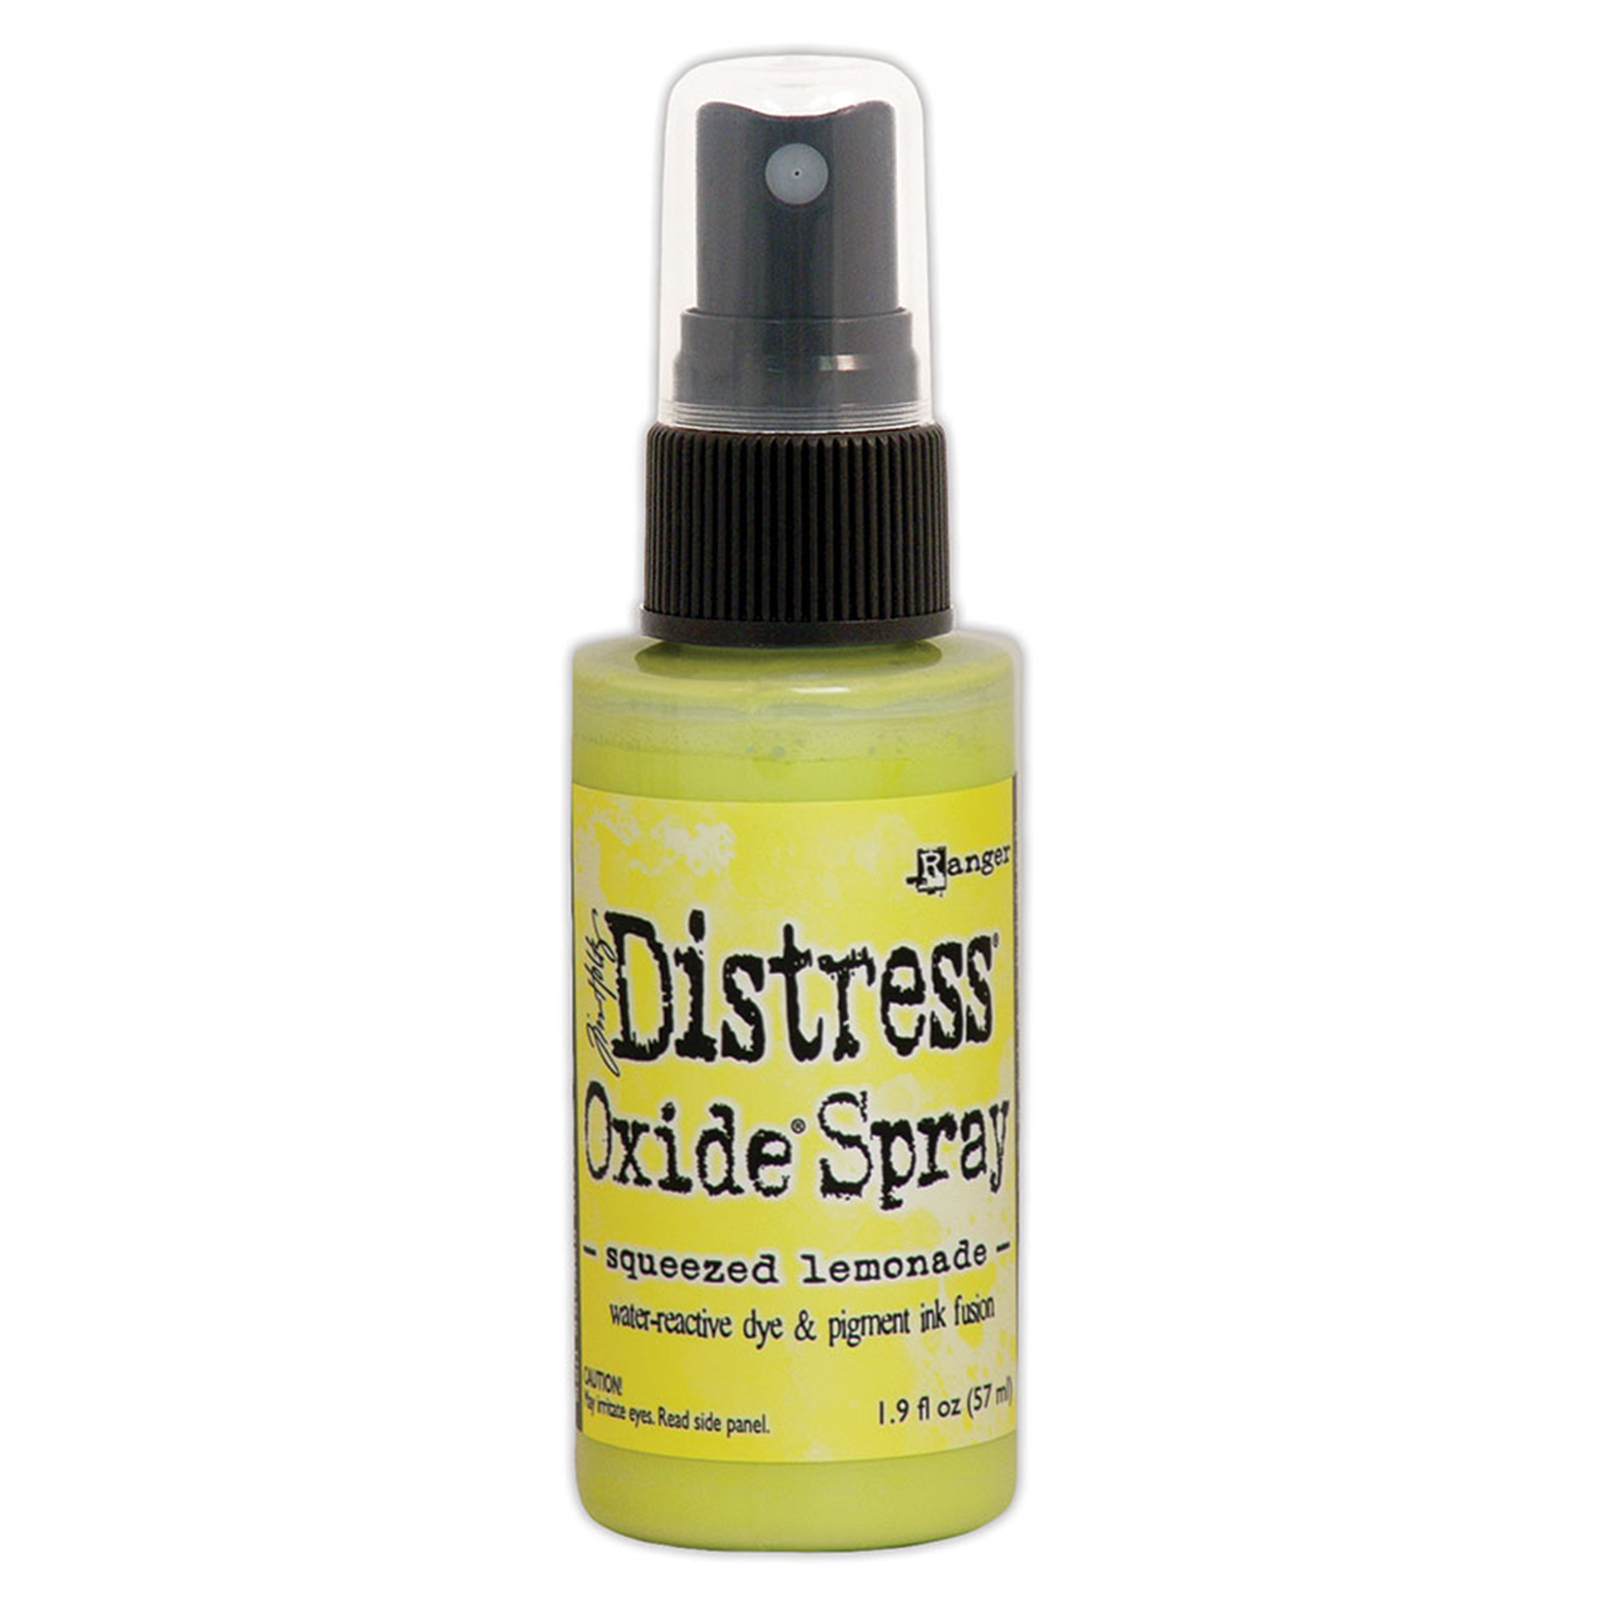 Ranger • Distress oxide spray Squeezedlemonade